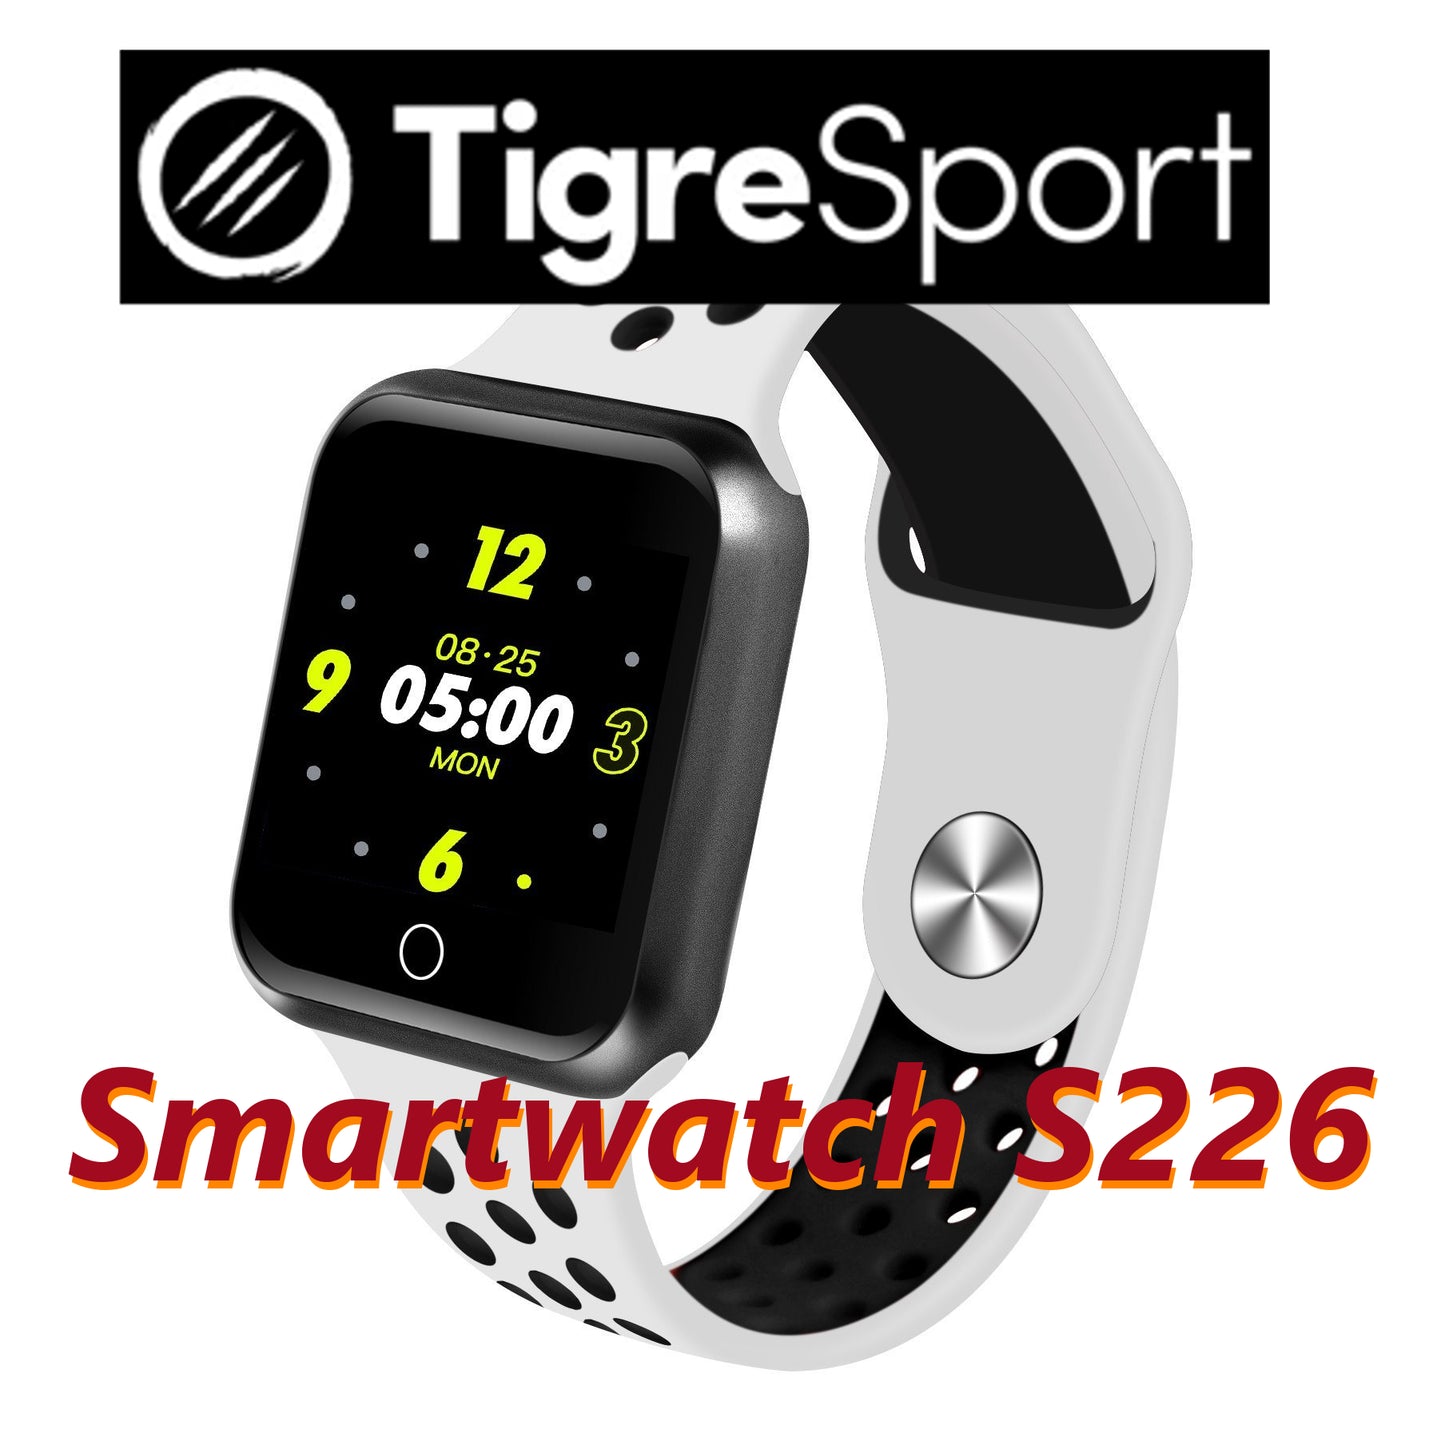 Smartwatch S226